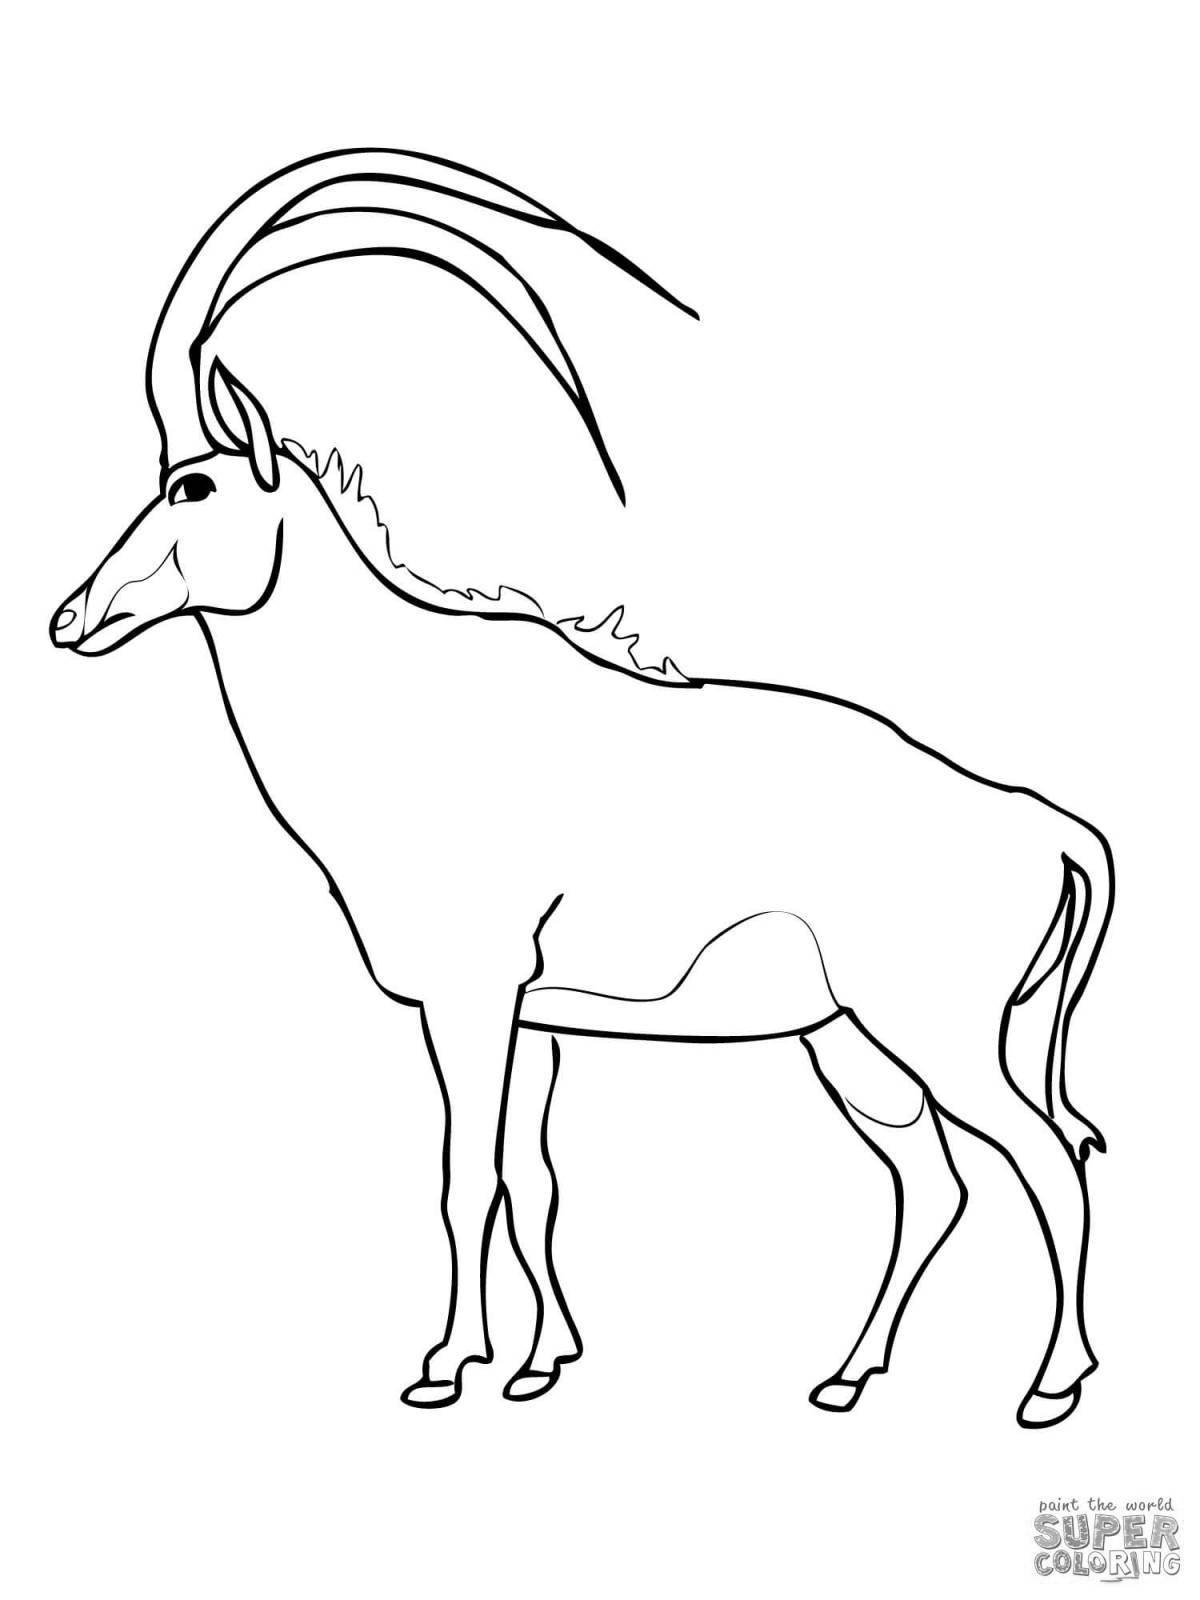 Rampant golden antelope coloring page